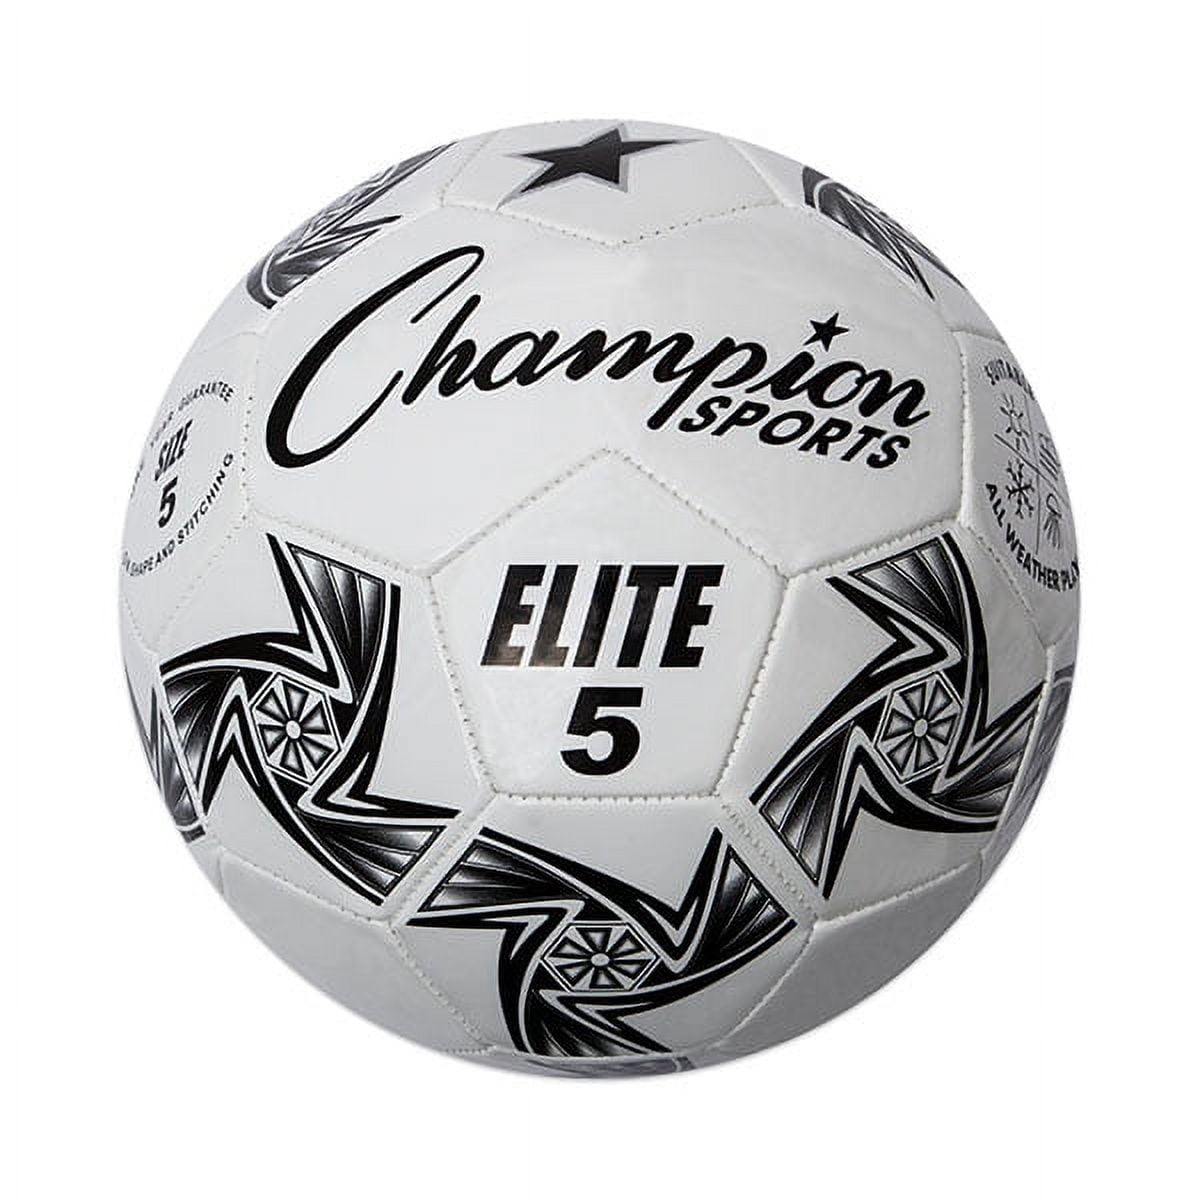 Picture of Champion Sports ELITE5 Elite Soccer Ball, White & Black - Size 5